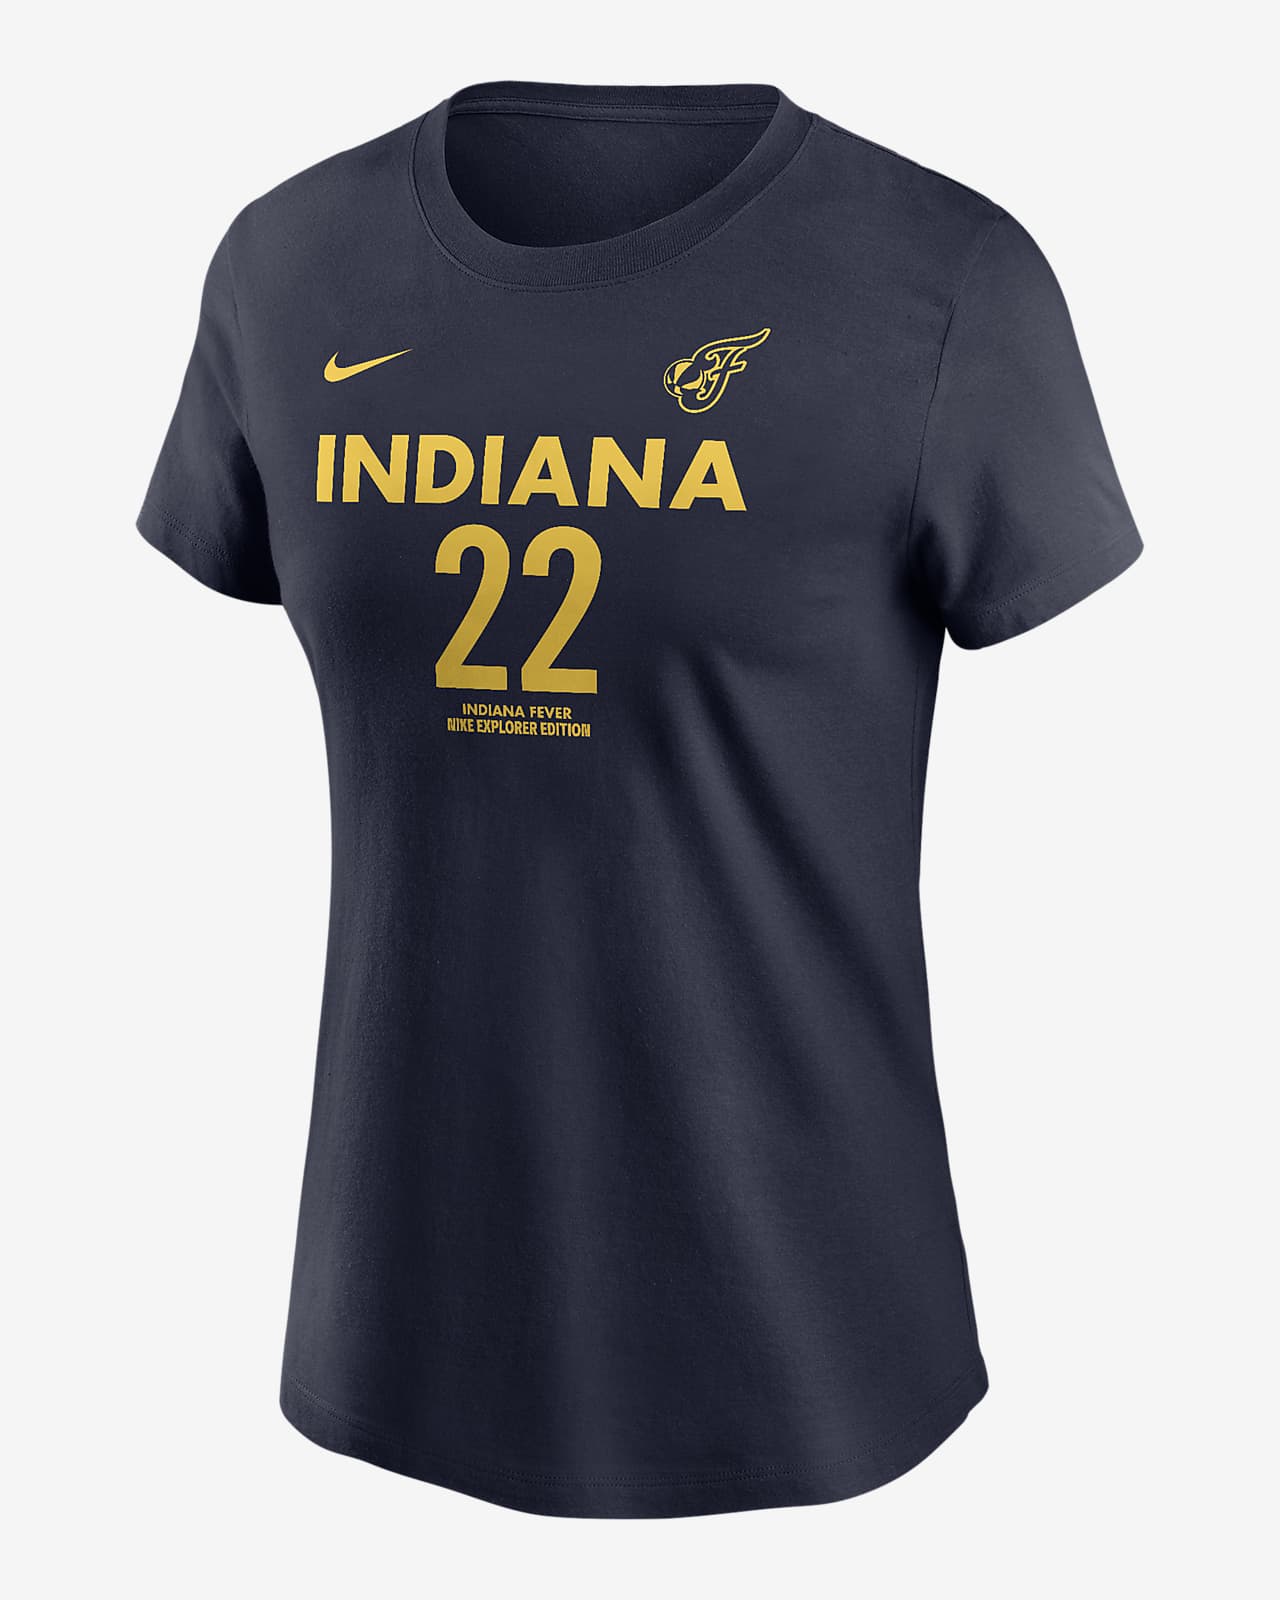 Playera Nike de la WNBA para mujer Caitlin Clark Indiana Fever